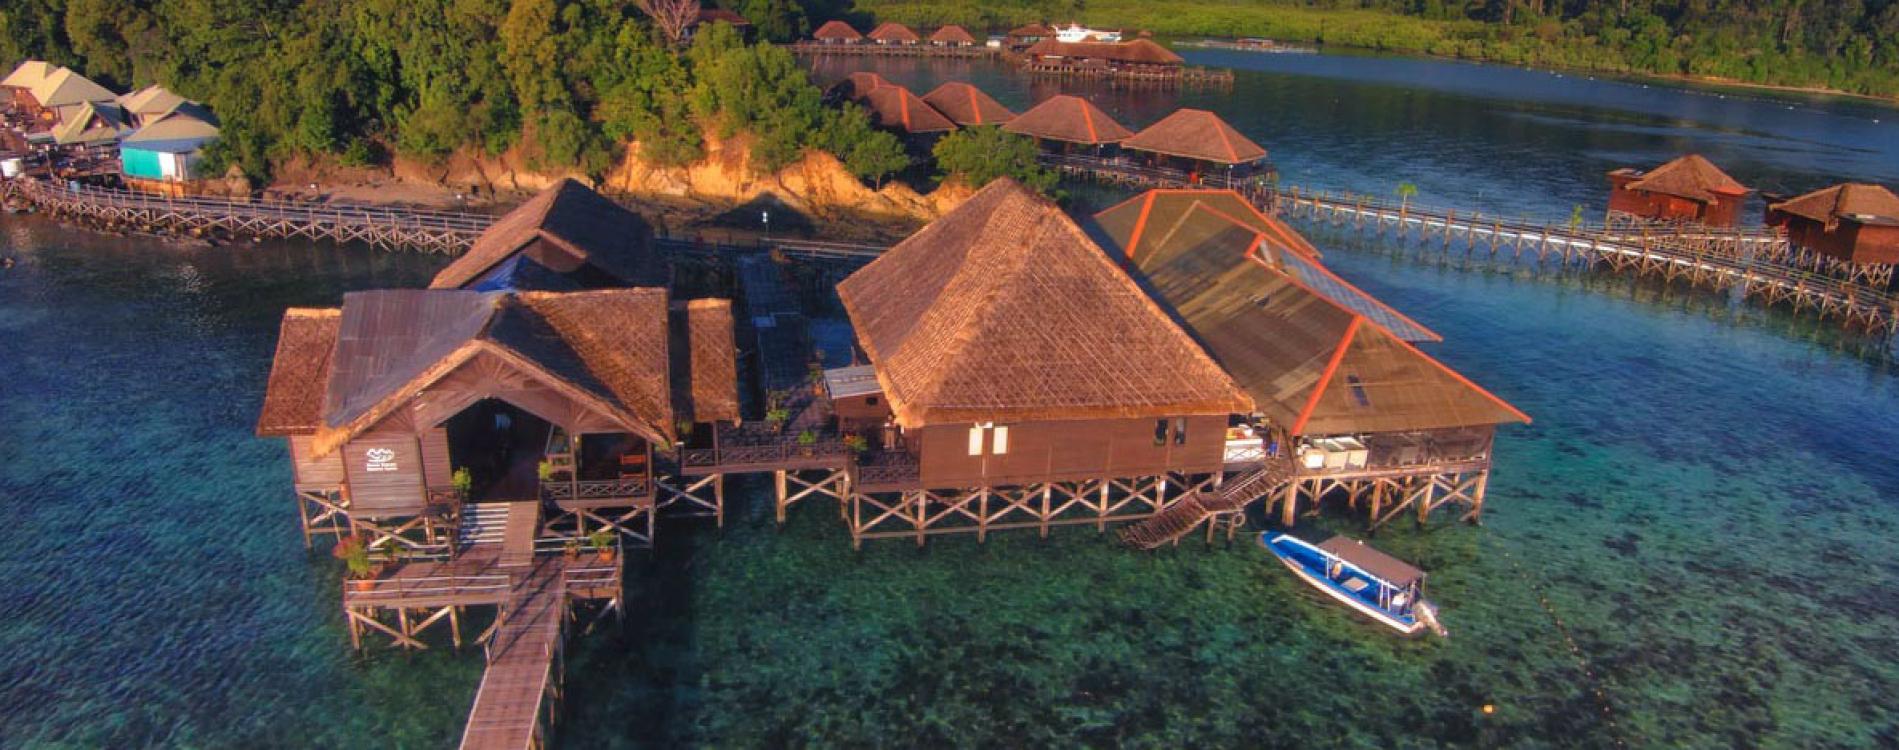 Gayana Marine Resort, in Kota Kinabalu, Malaysia - Preferred Hotels ...